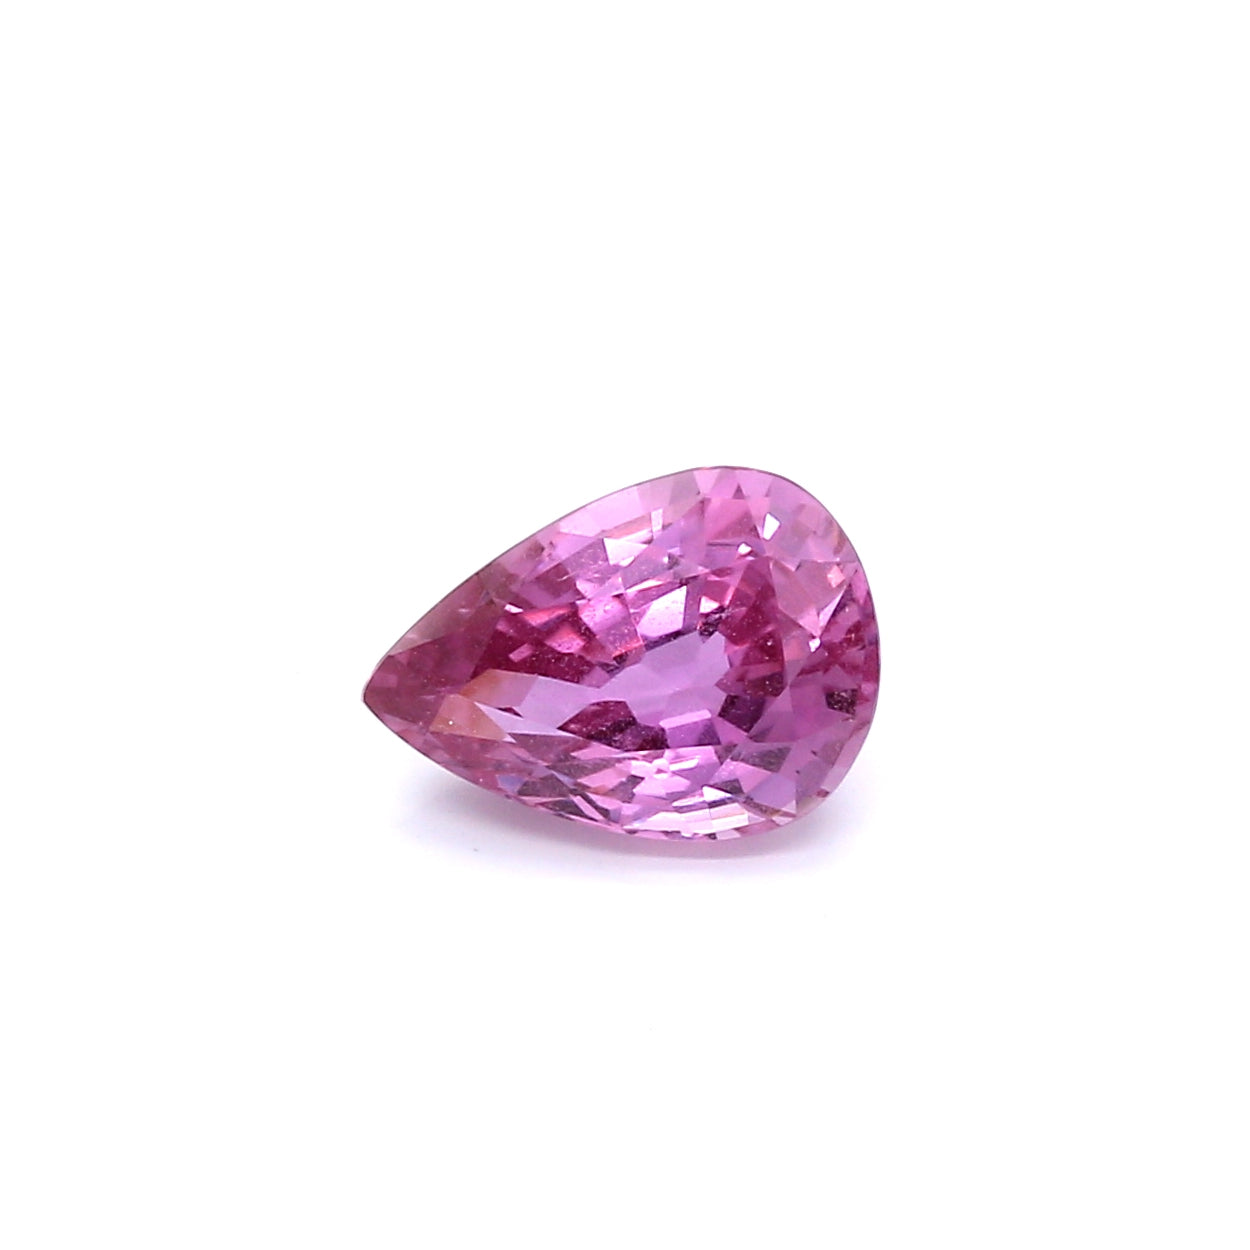 1.80ct Pink, Pear Shape Sapphire, No Heat, Madagascar - 9.12 x 6.46 x 4.17mm